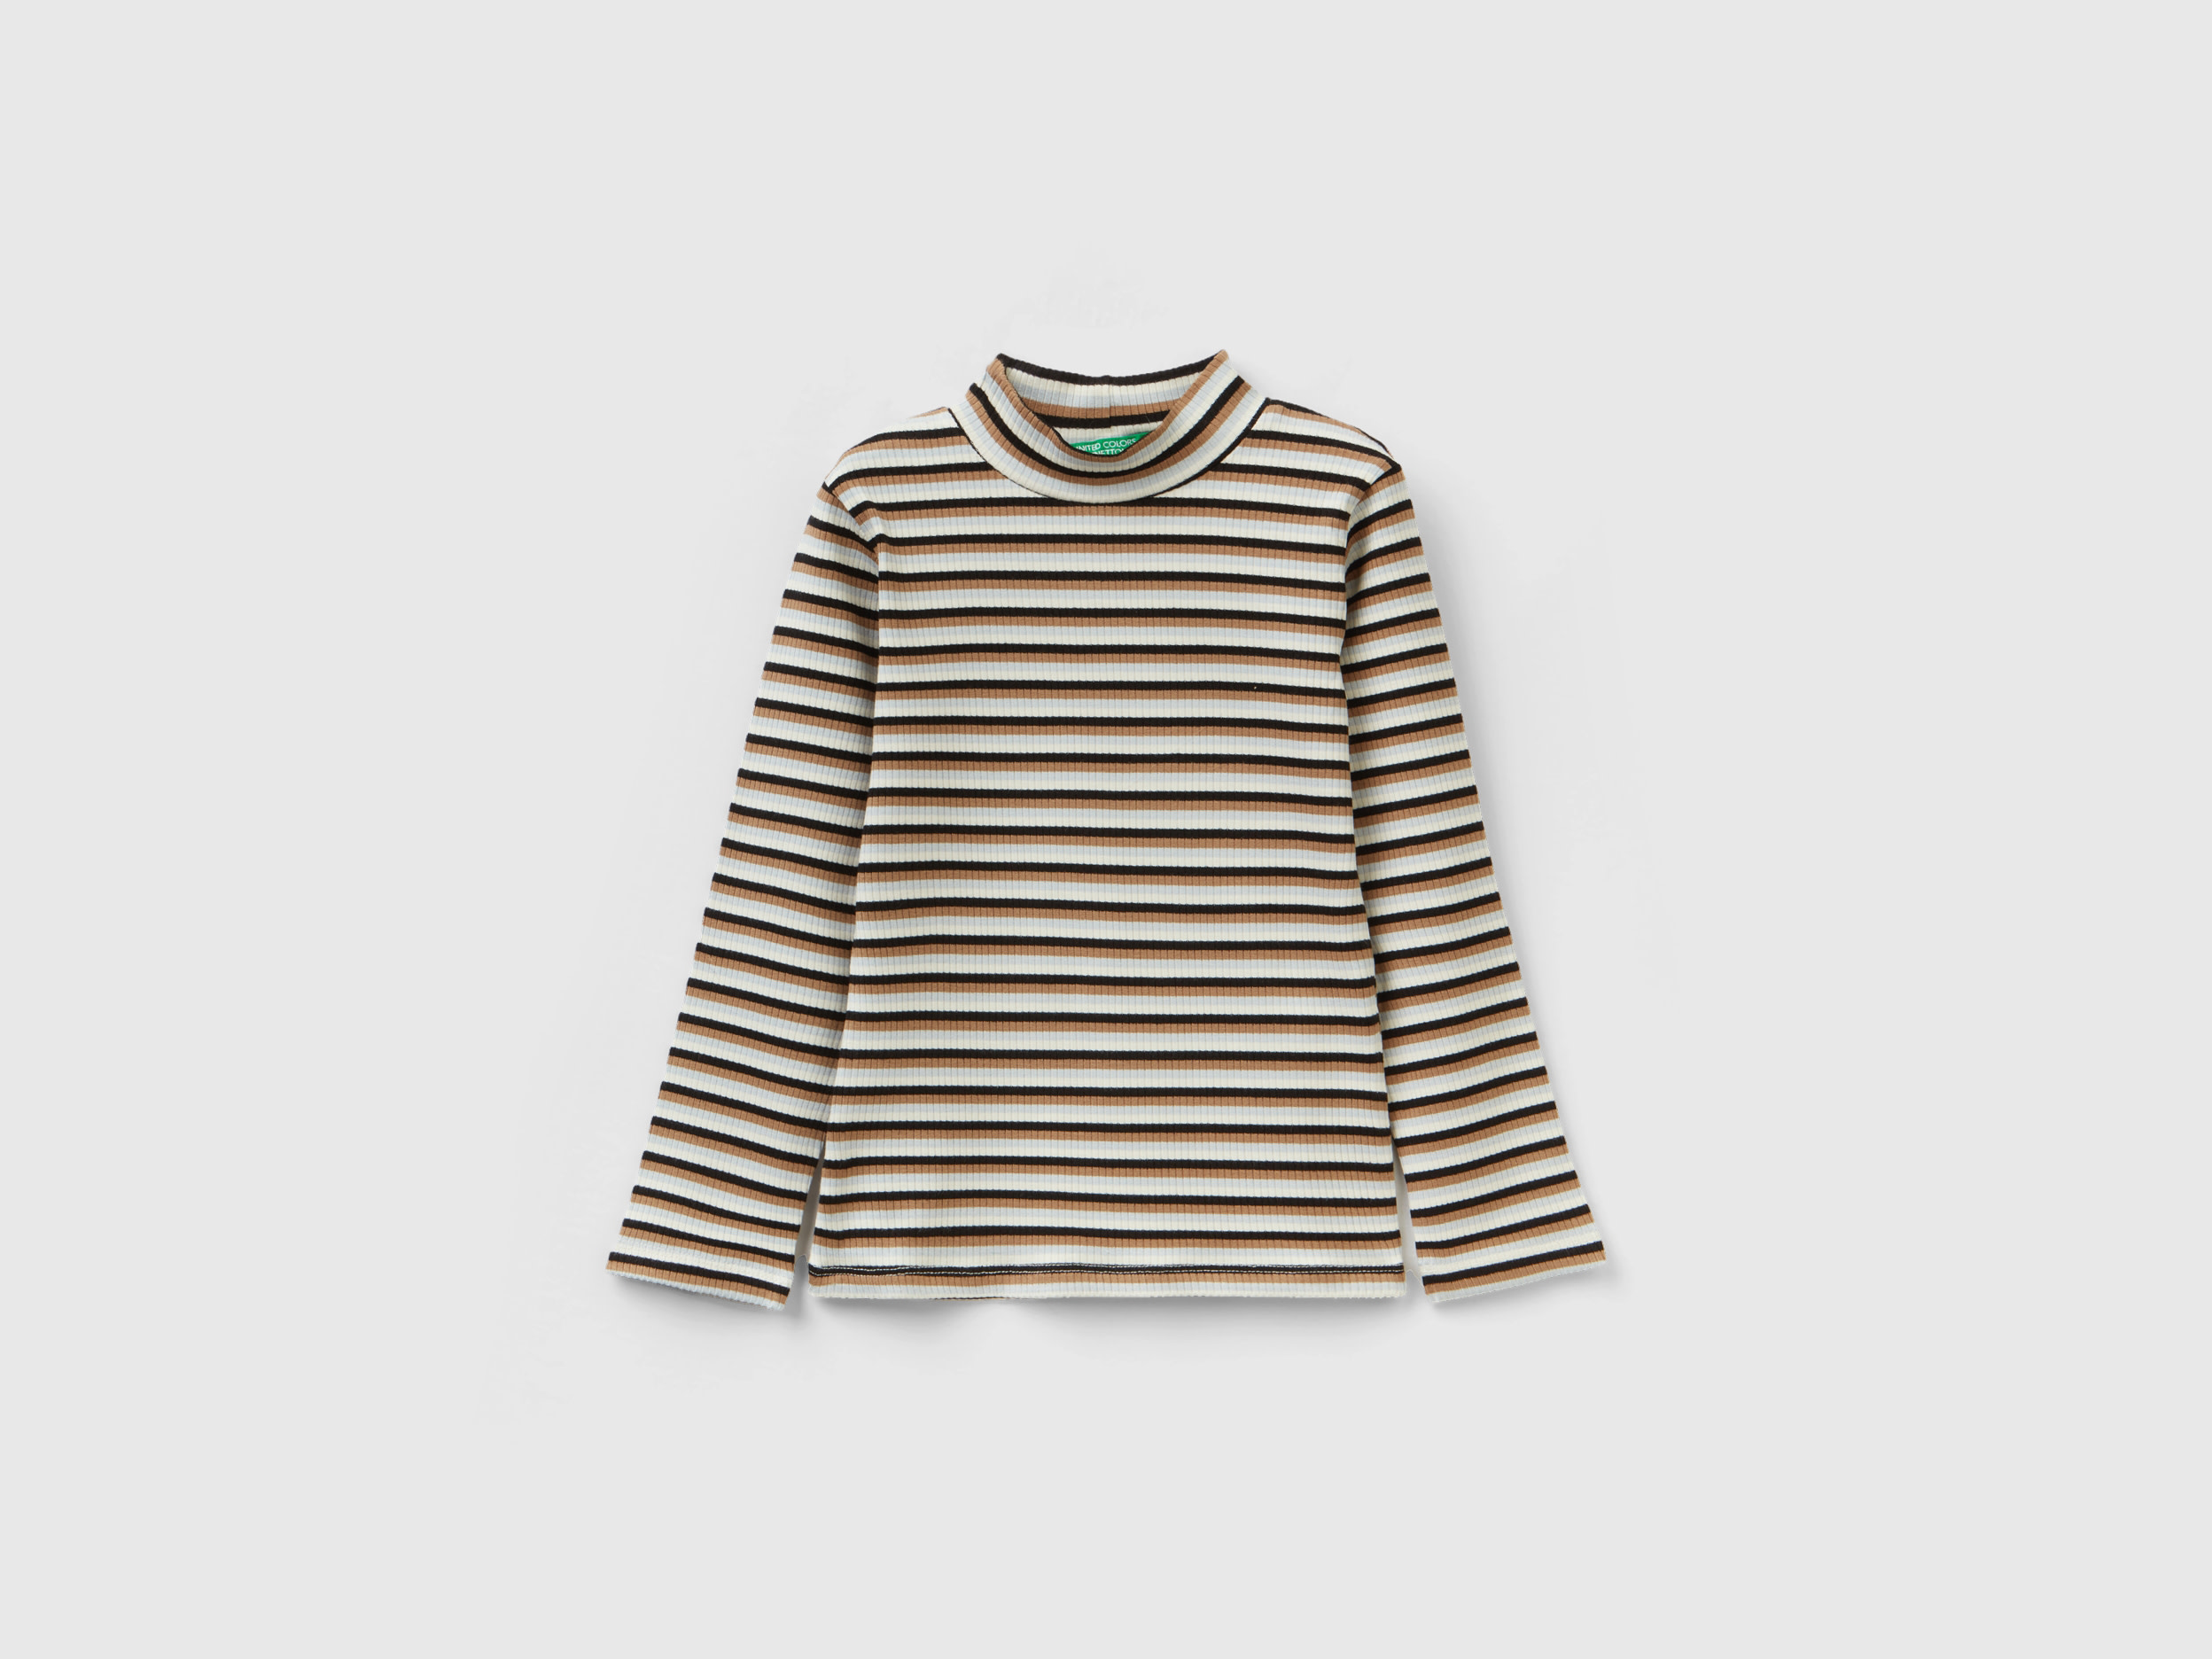 Benetton, Striped Turtleneck T-shirt, size 5-6, Multi-color, Kids